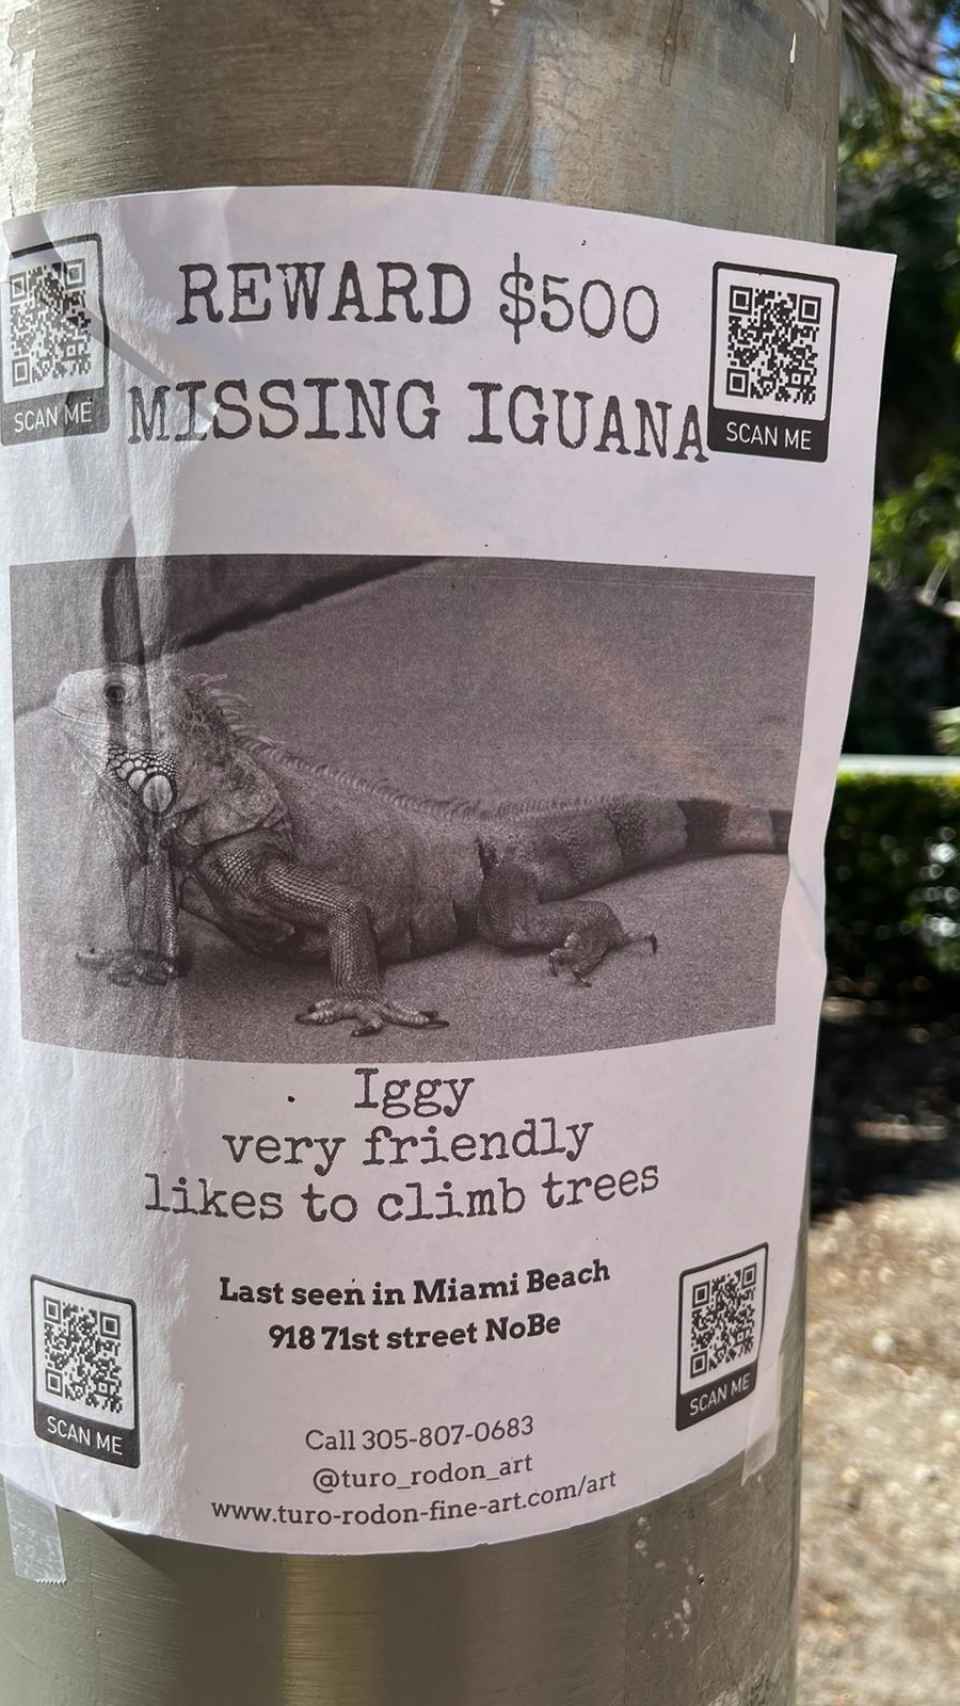 Se busca iguana, perdida en Miami Art Basel.